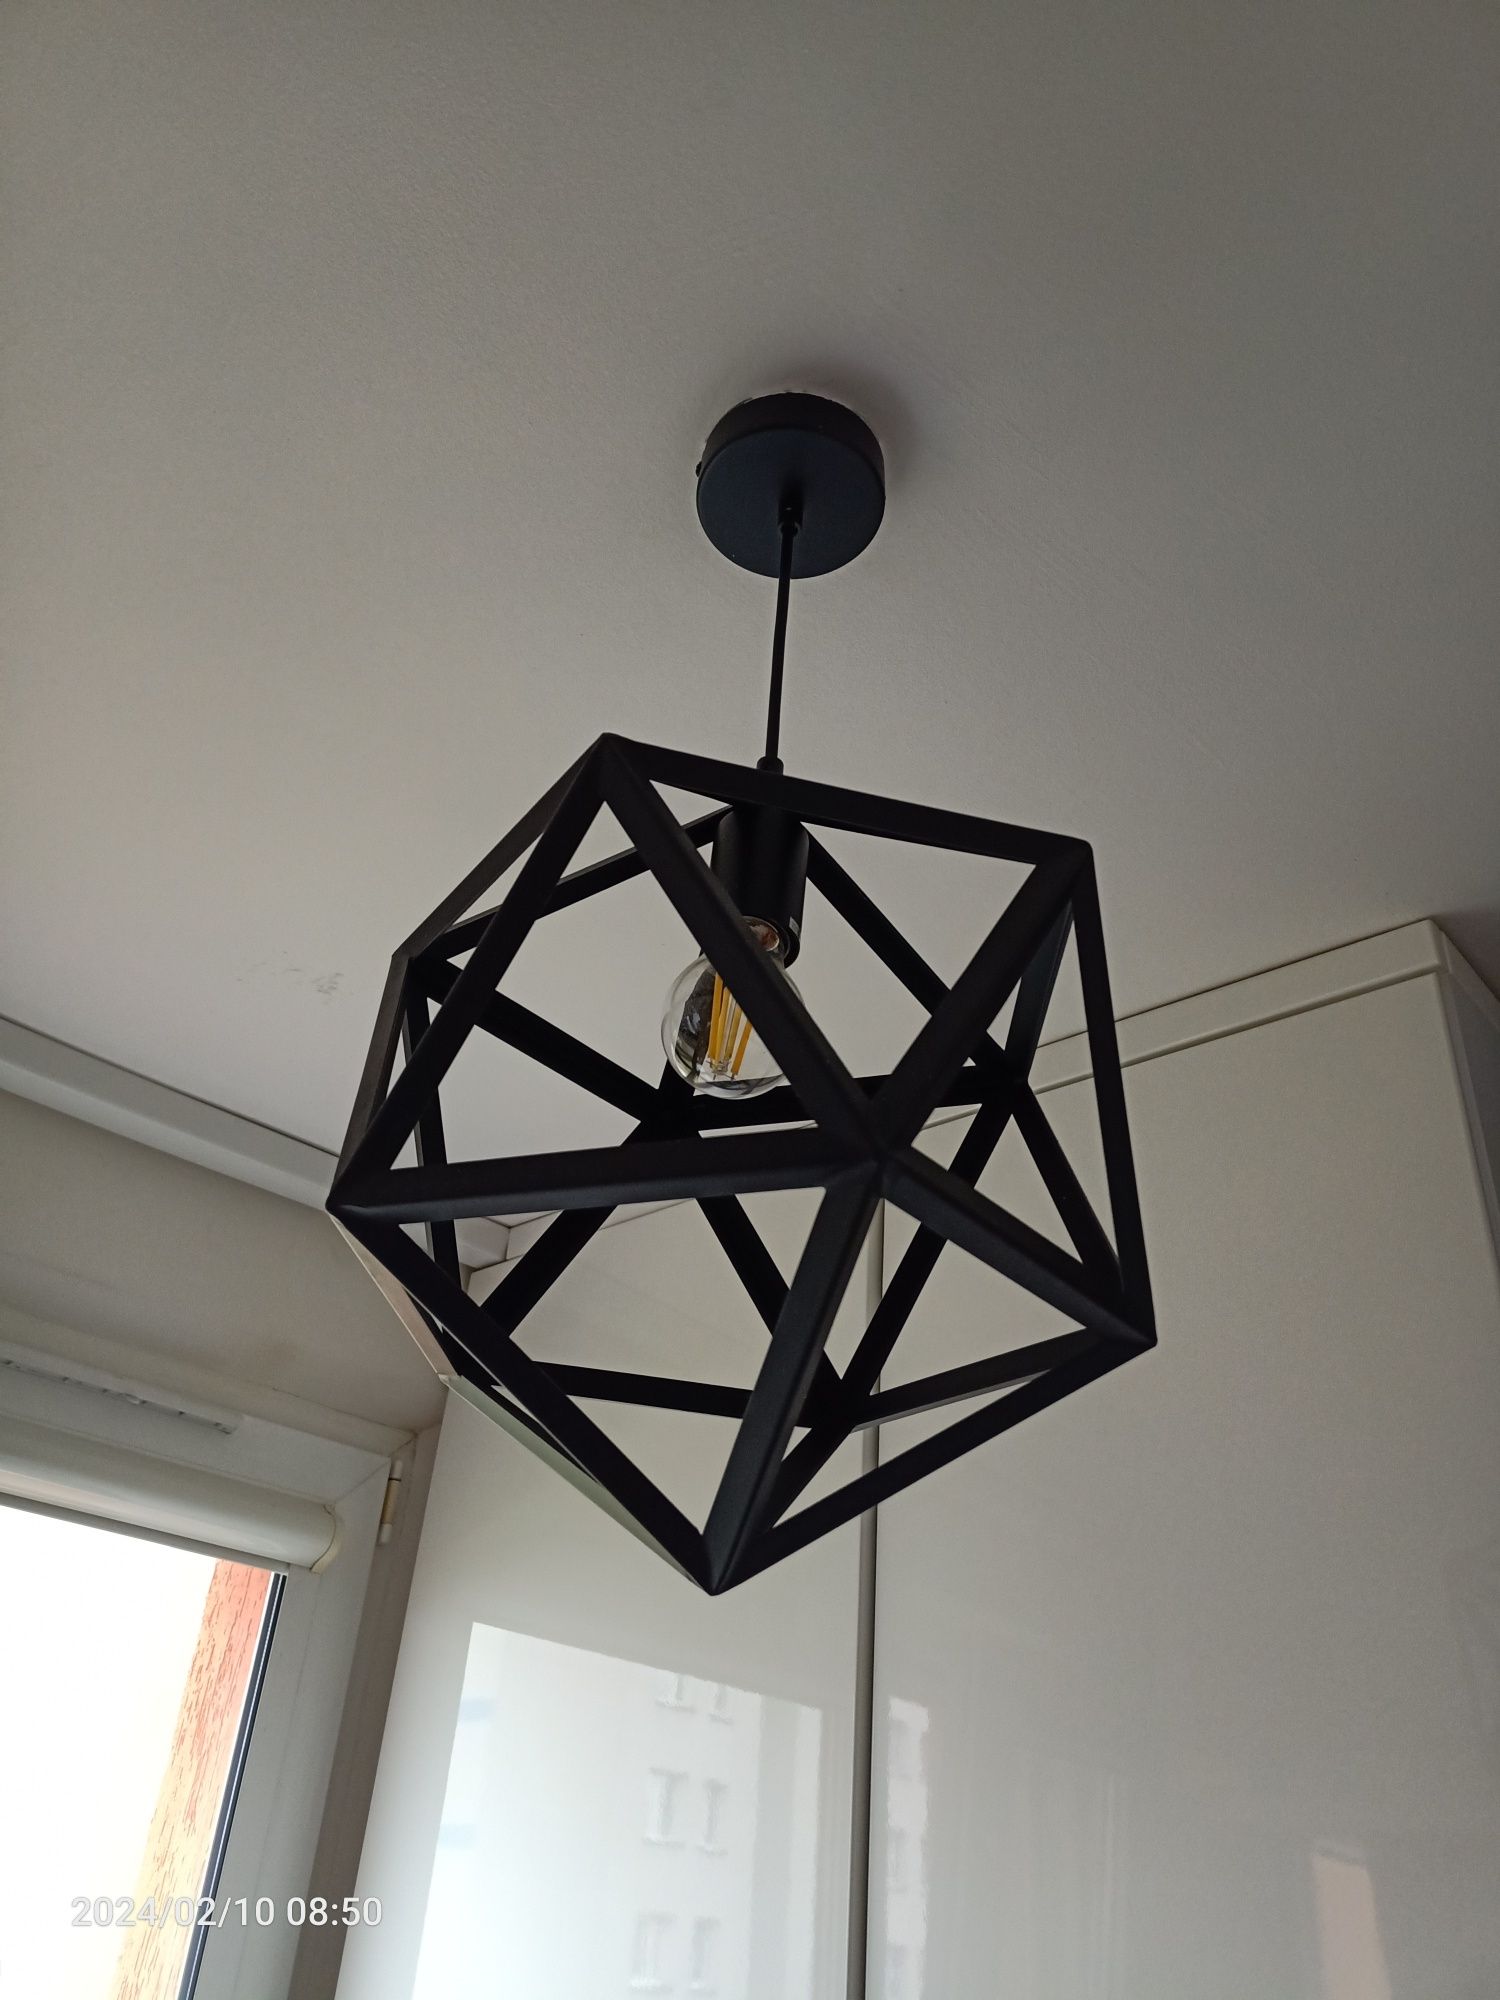 Lampa ażurowa stalowa pięciokąt + żarówka LED retro